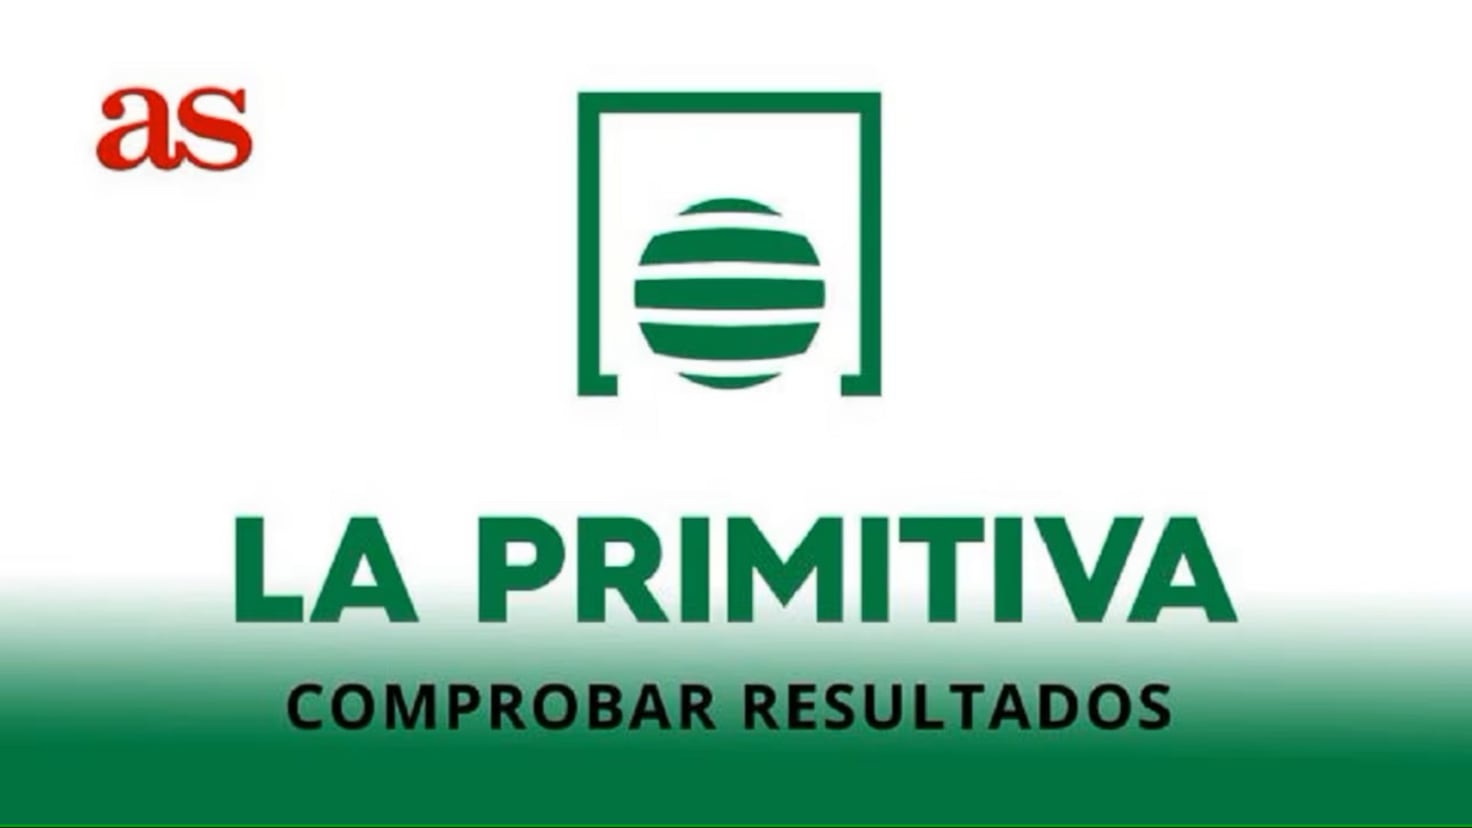 La Primitiva: check the results of today's draw, Saturday, May 4
